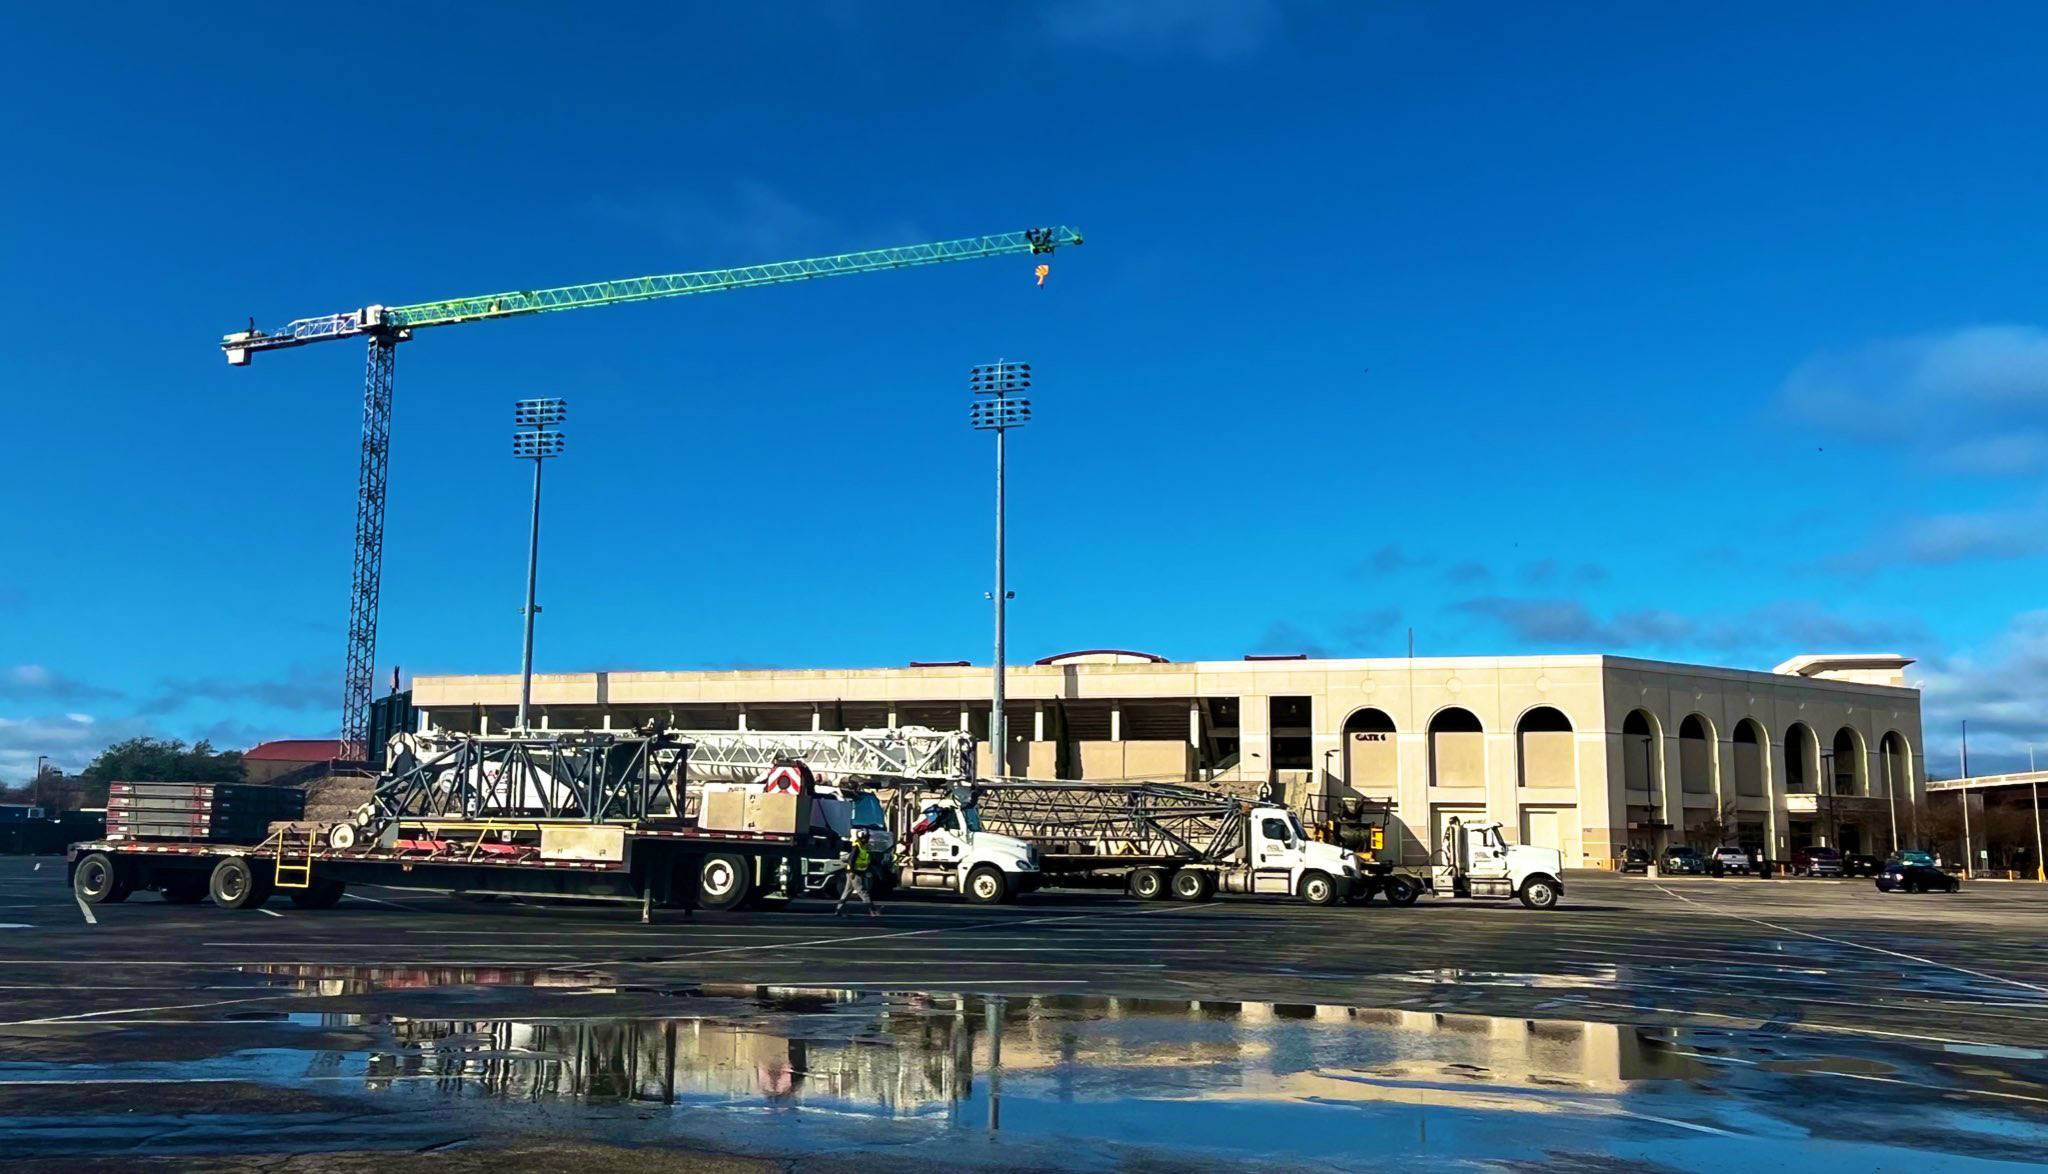 A crane rises above Bobcat Stadium during a sunny day.